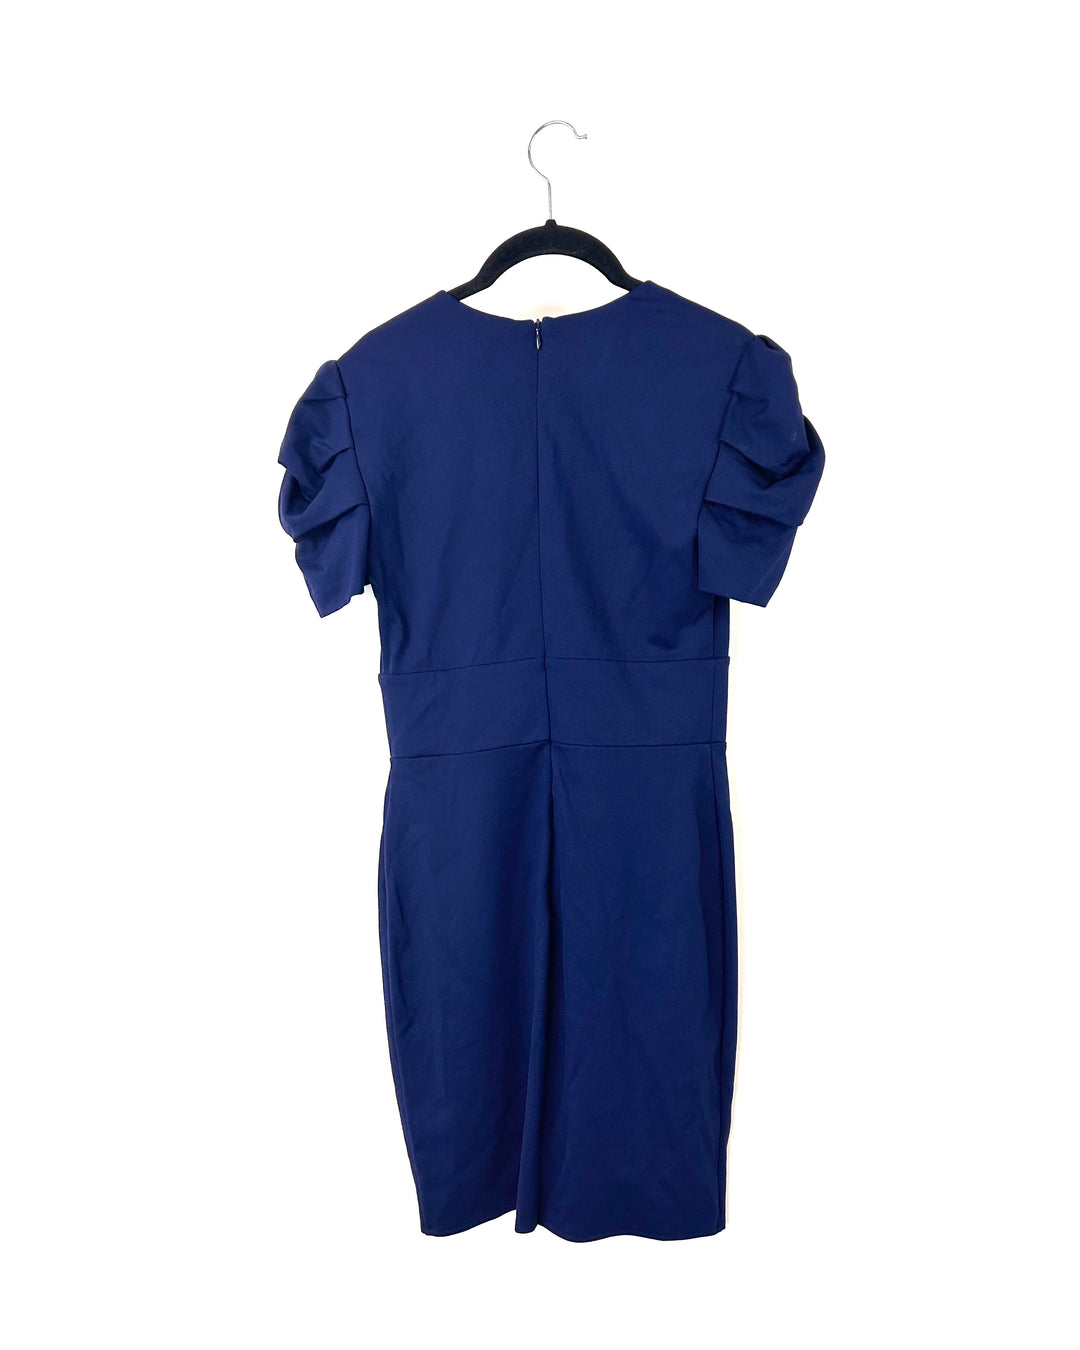 Navy Blue V Neck Dress - Small